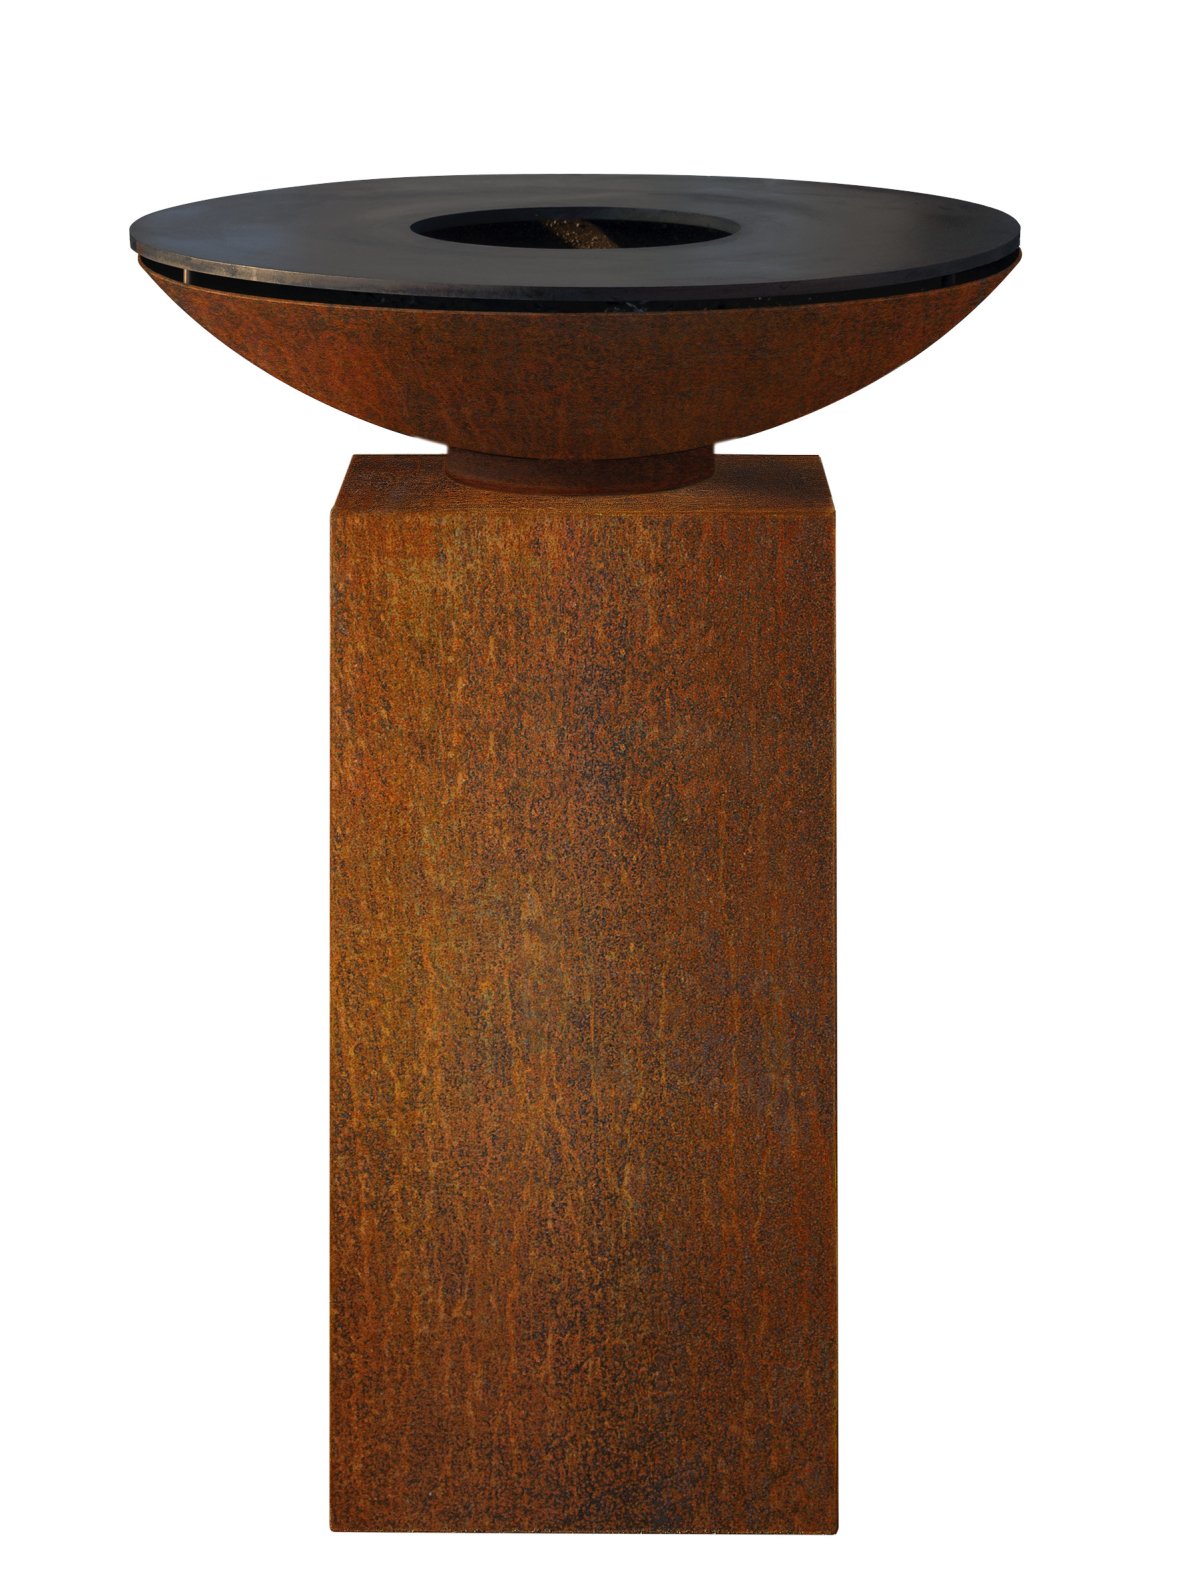 Pedestal barbecue with 100 cm Ø griddle